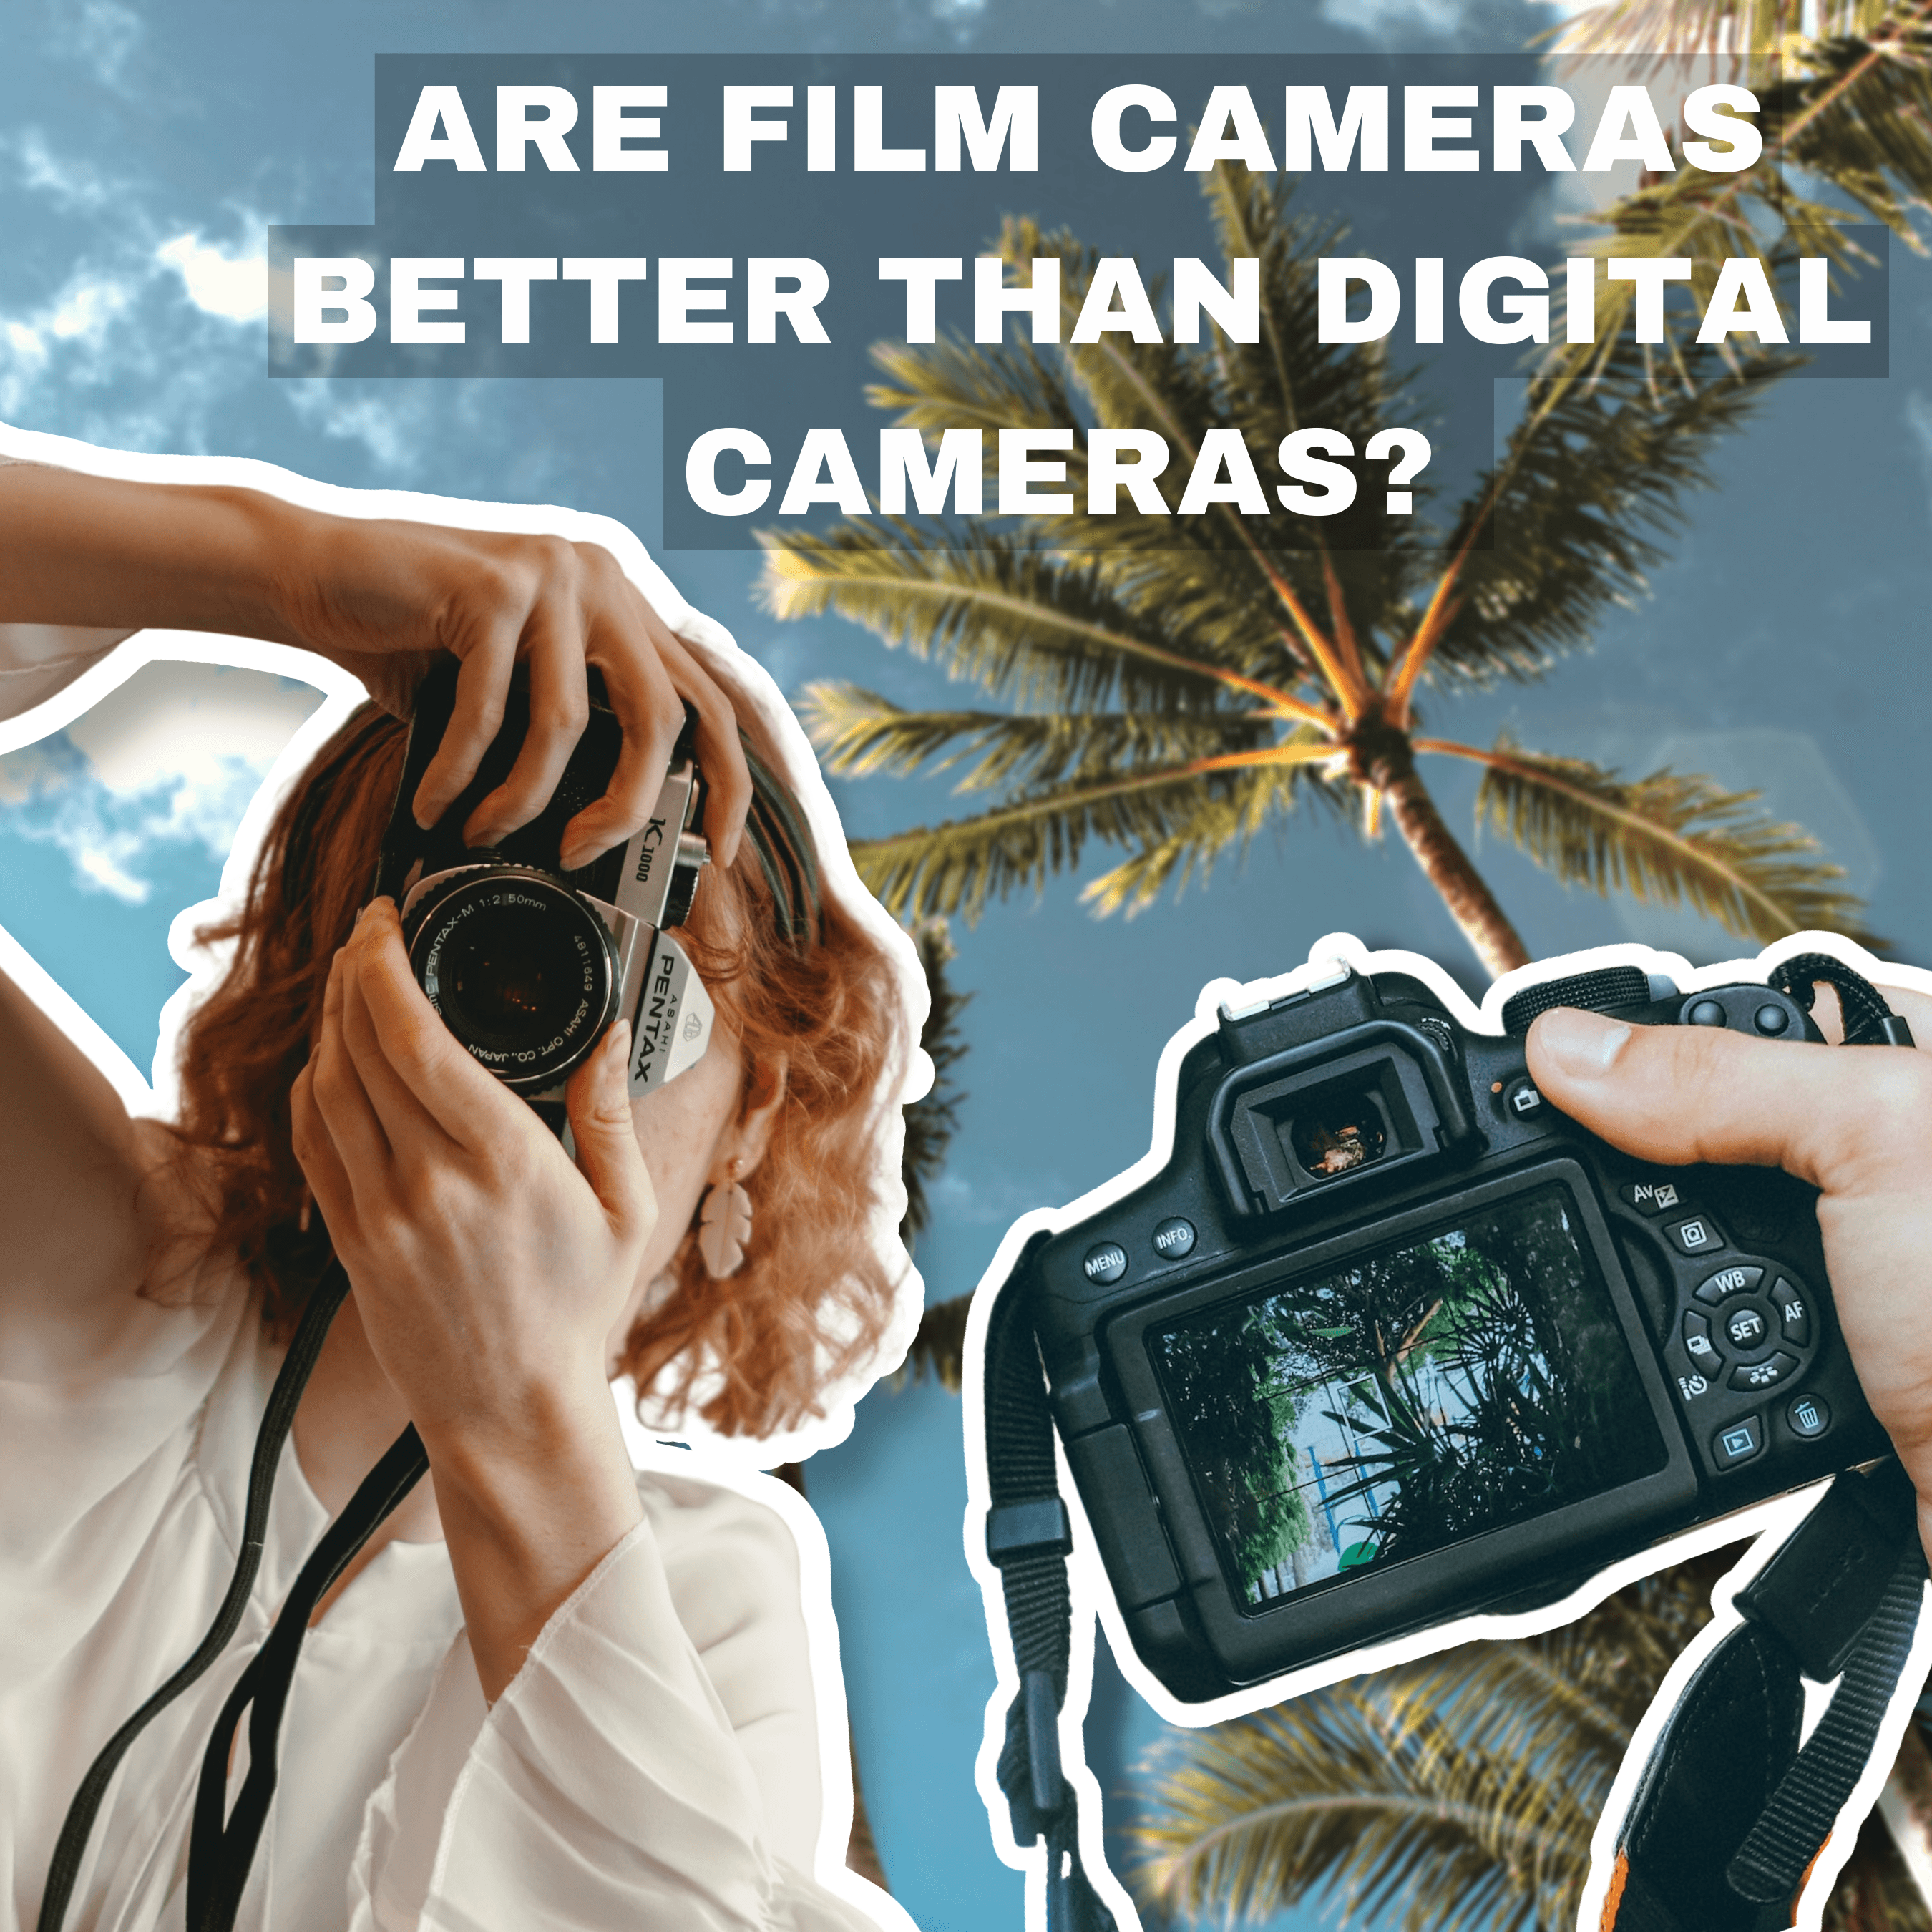 Film vs Digital - A Photo Comparison - TheDarkroom